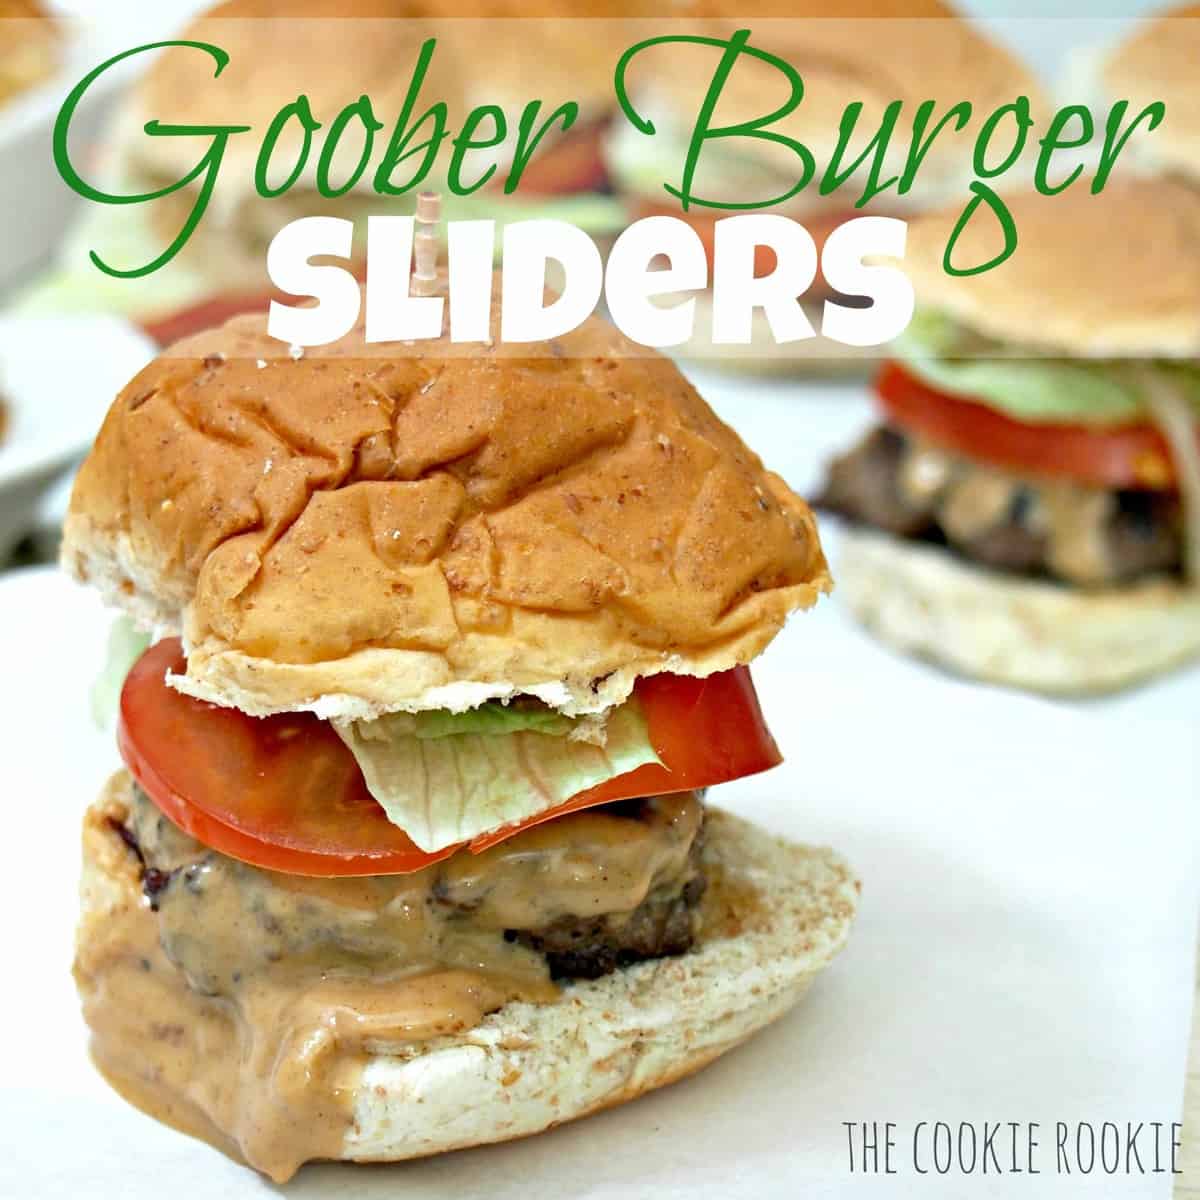 goober burger sliders (peanut butter burgers)